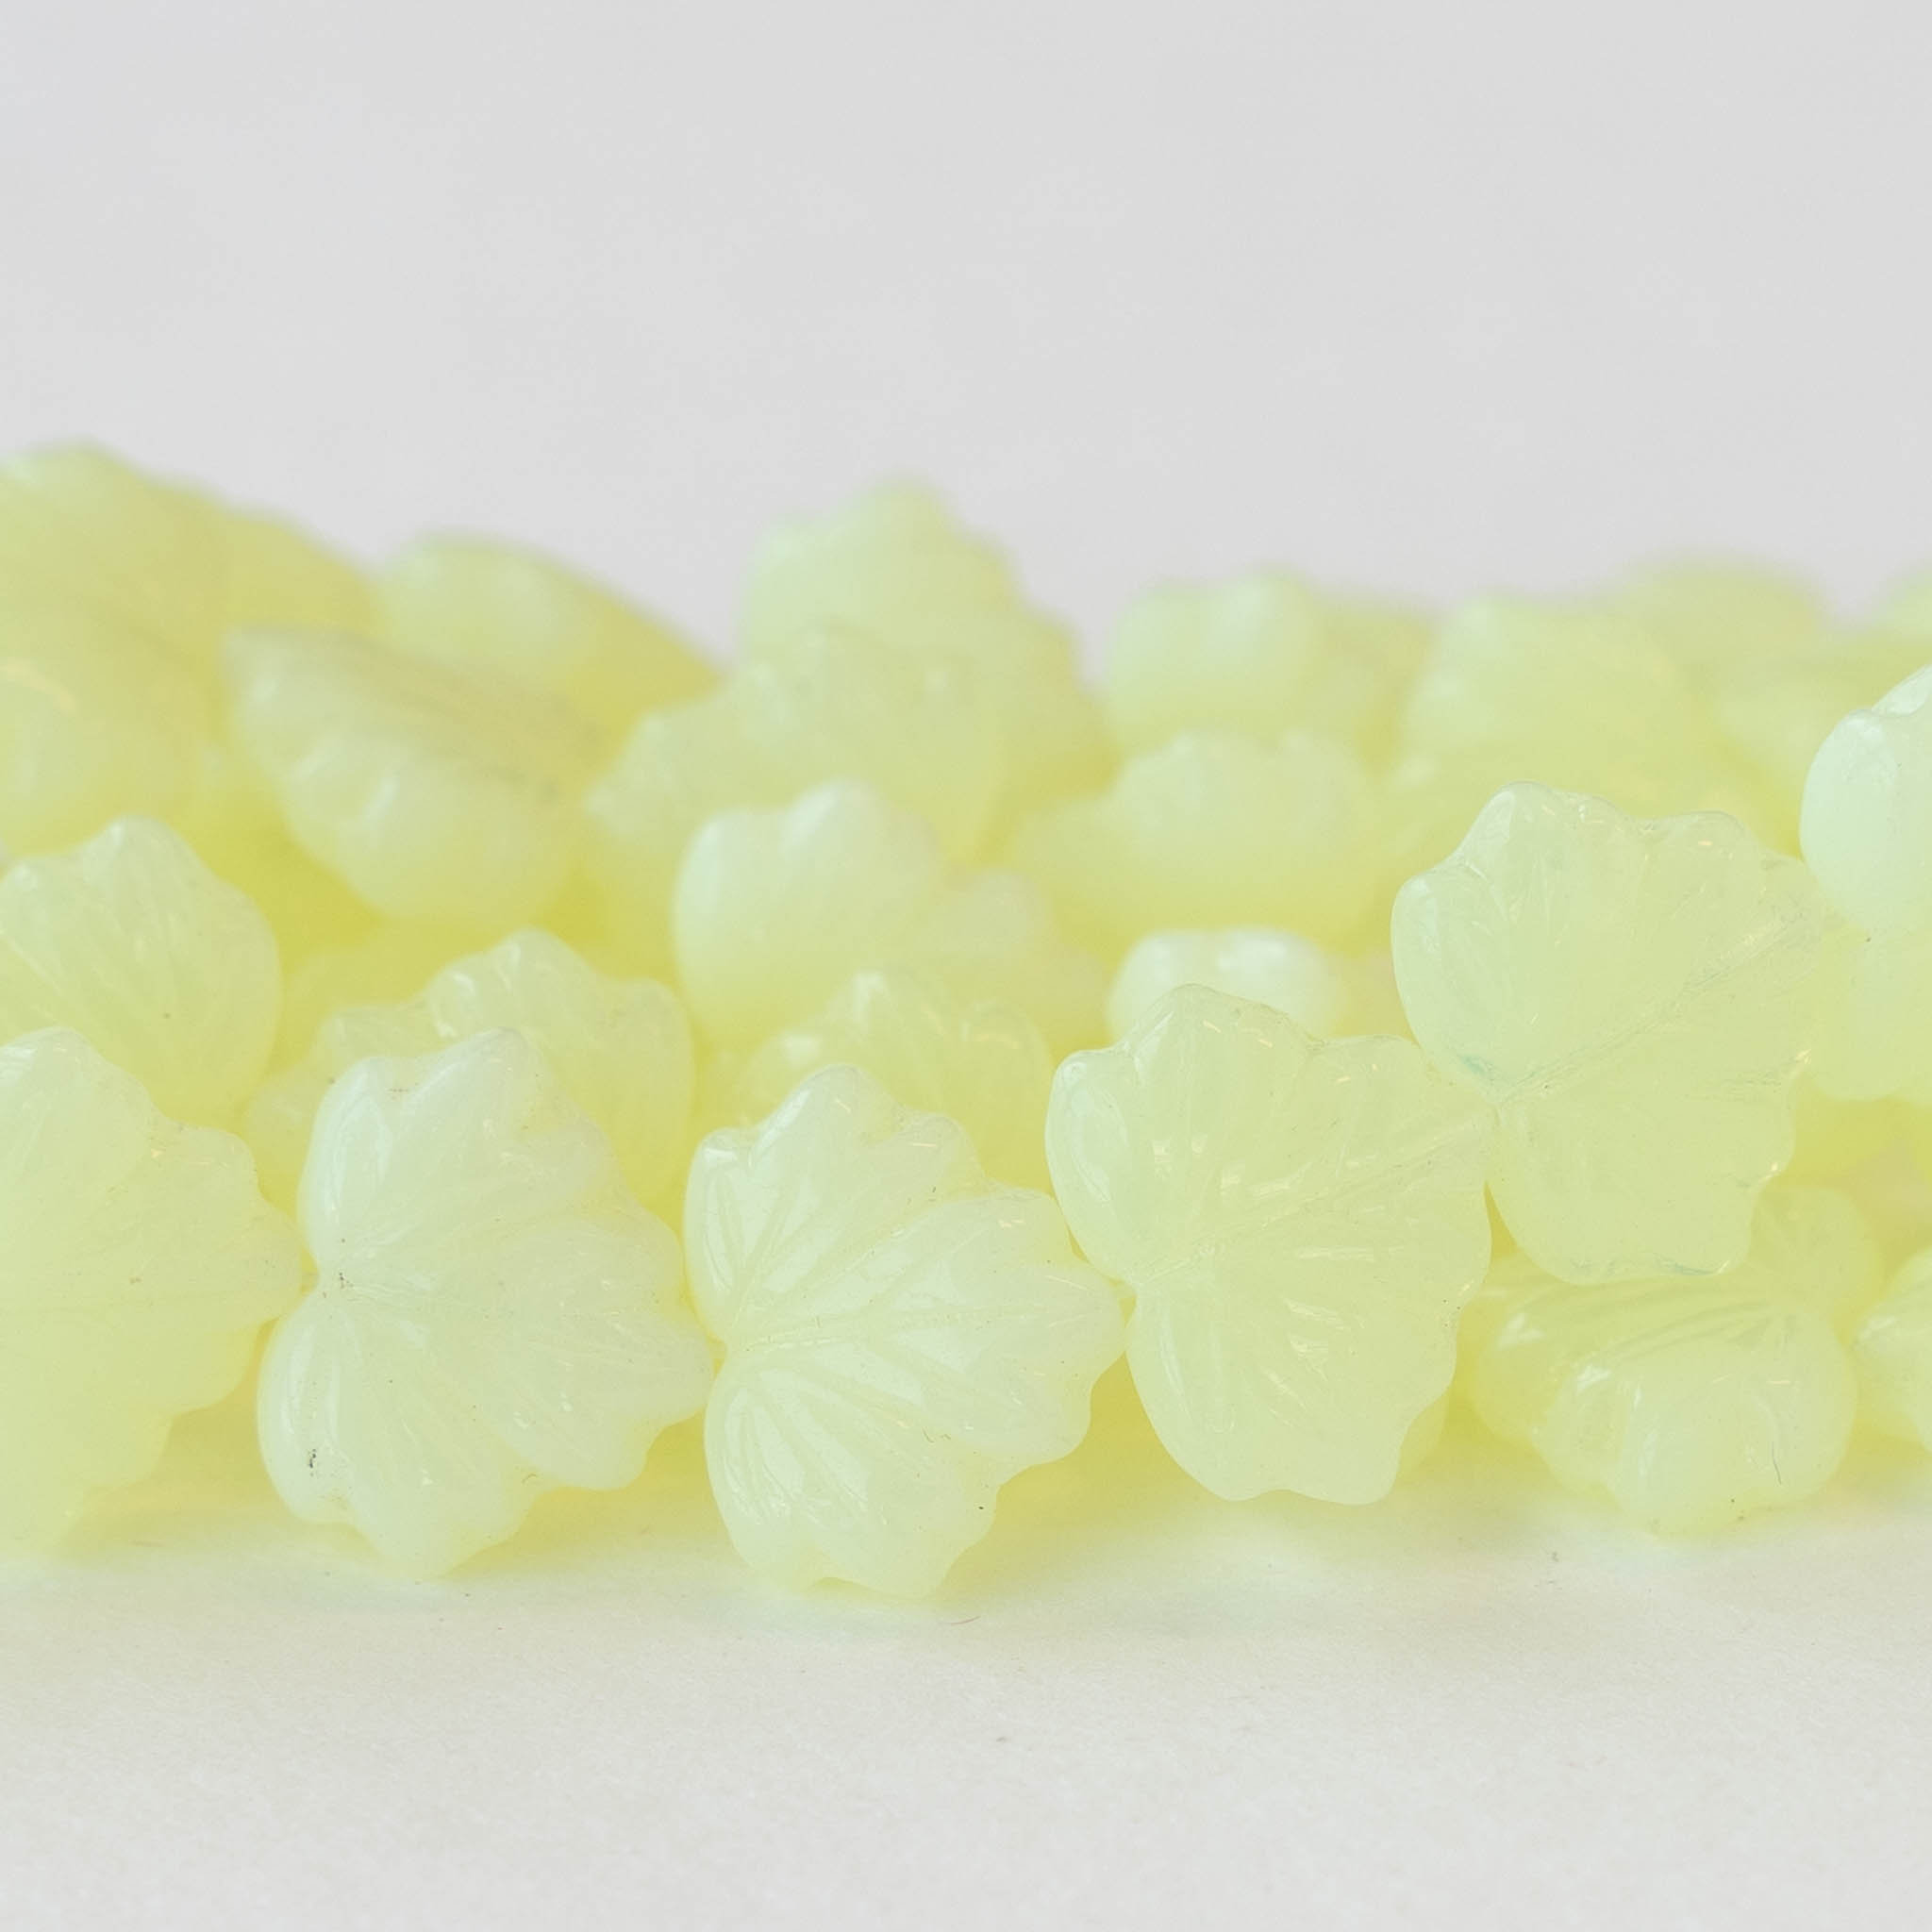 10 Glass Leaf Beads Czech Glass Beads 13mm Maple Leaf Beads Yellow